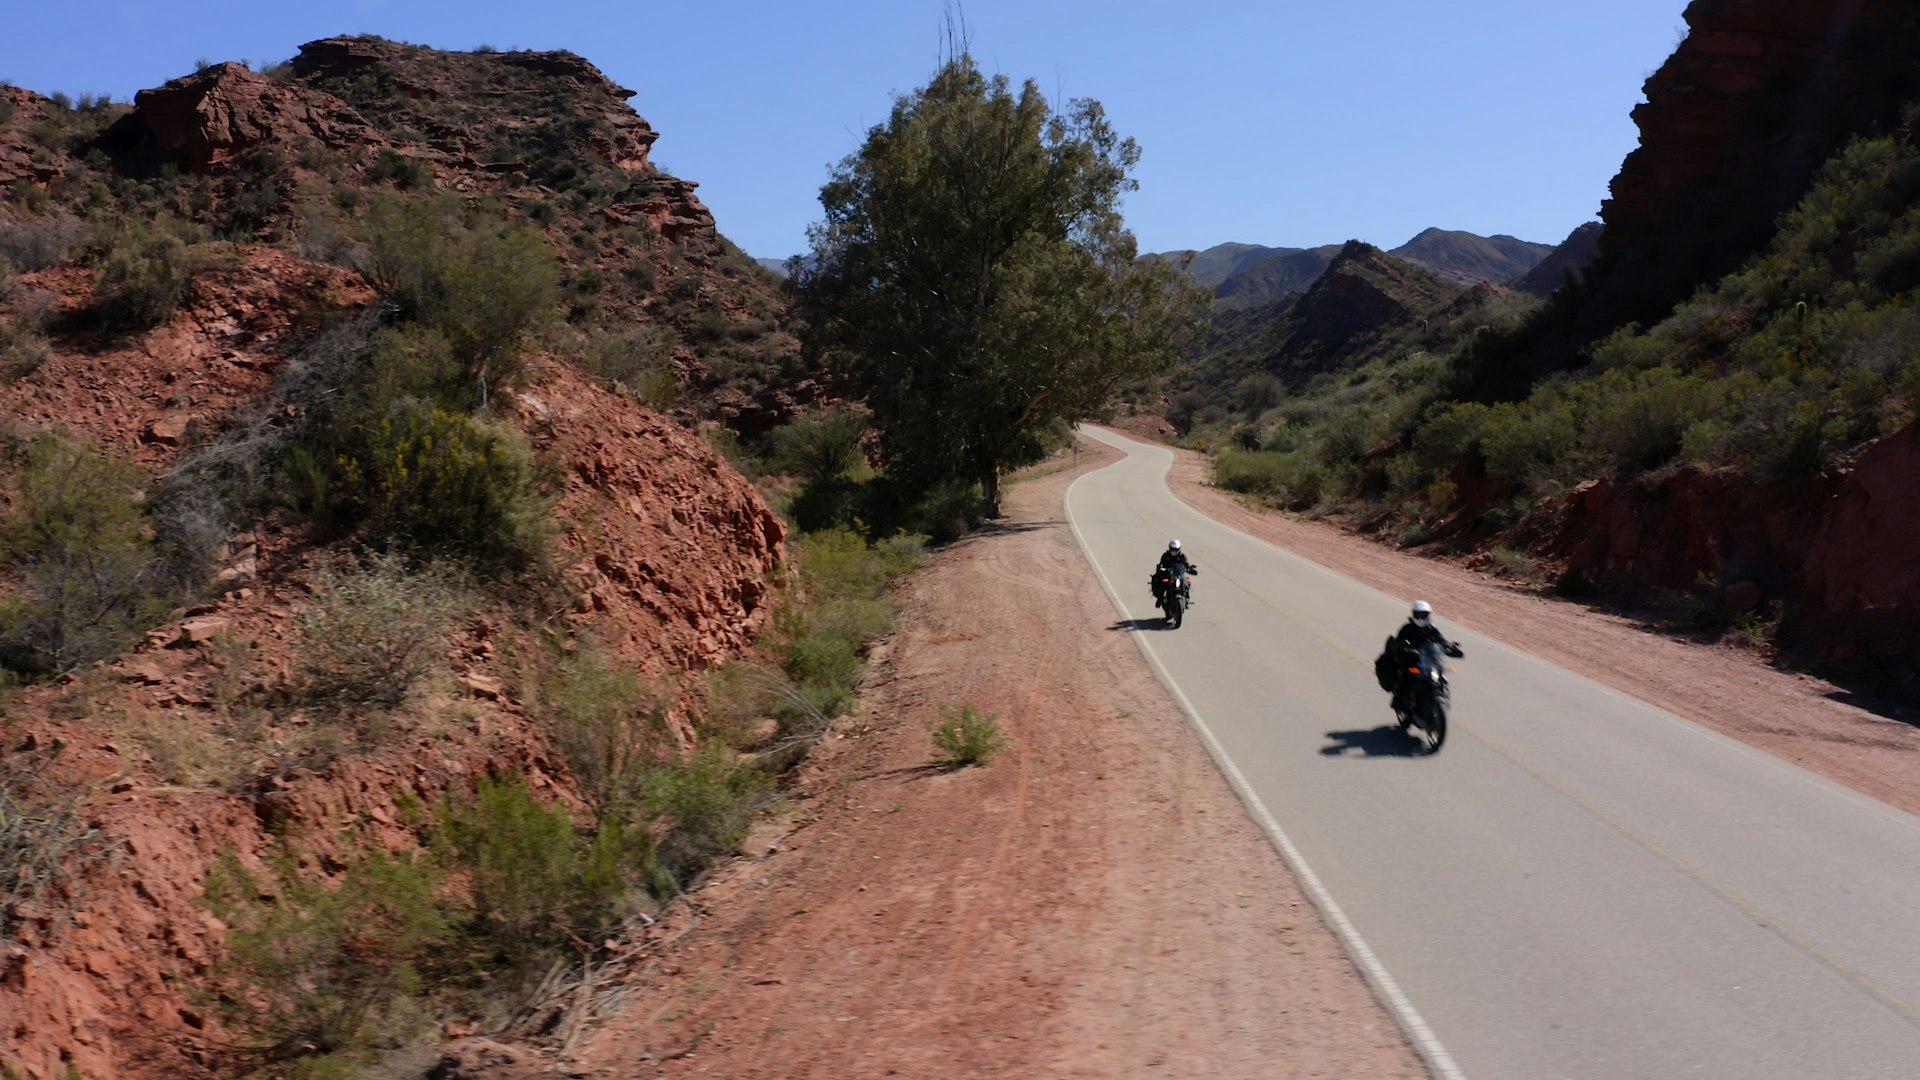 Ewan and Charley riding through the desert